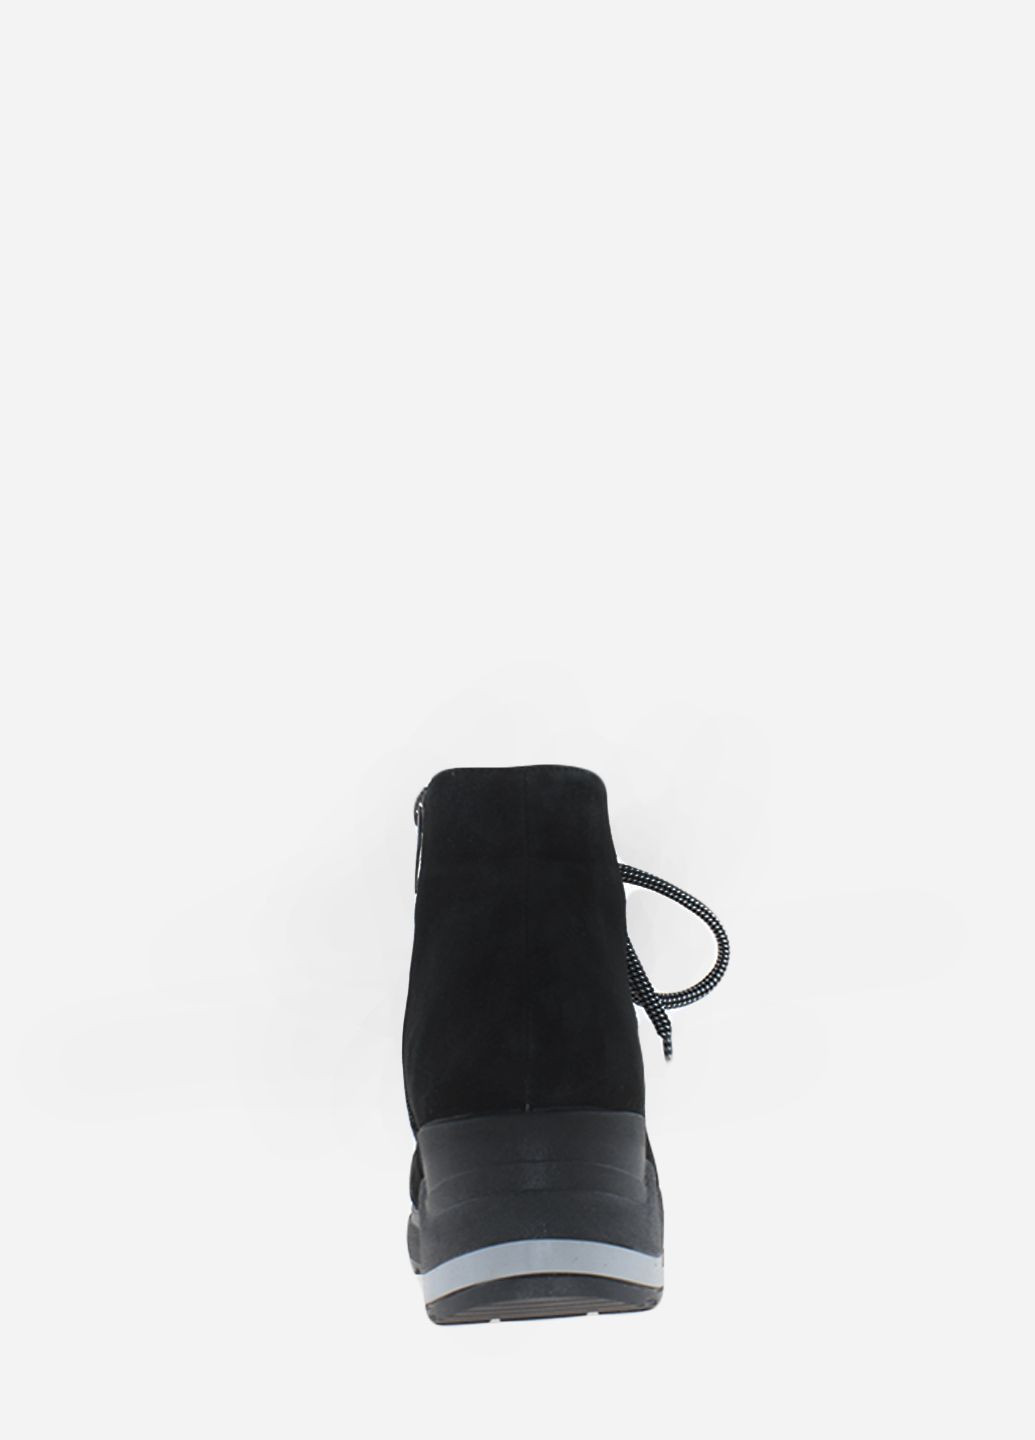 Зимние ботинки black&white rbw95478-11 черный Black & White из натуральной замши